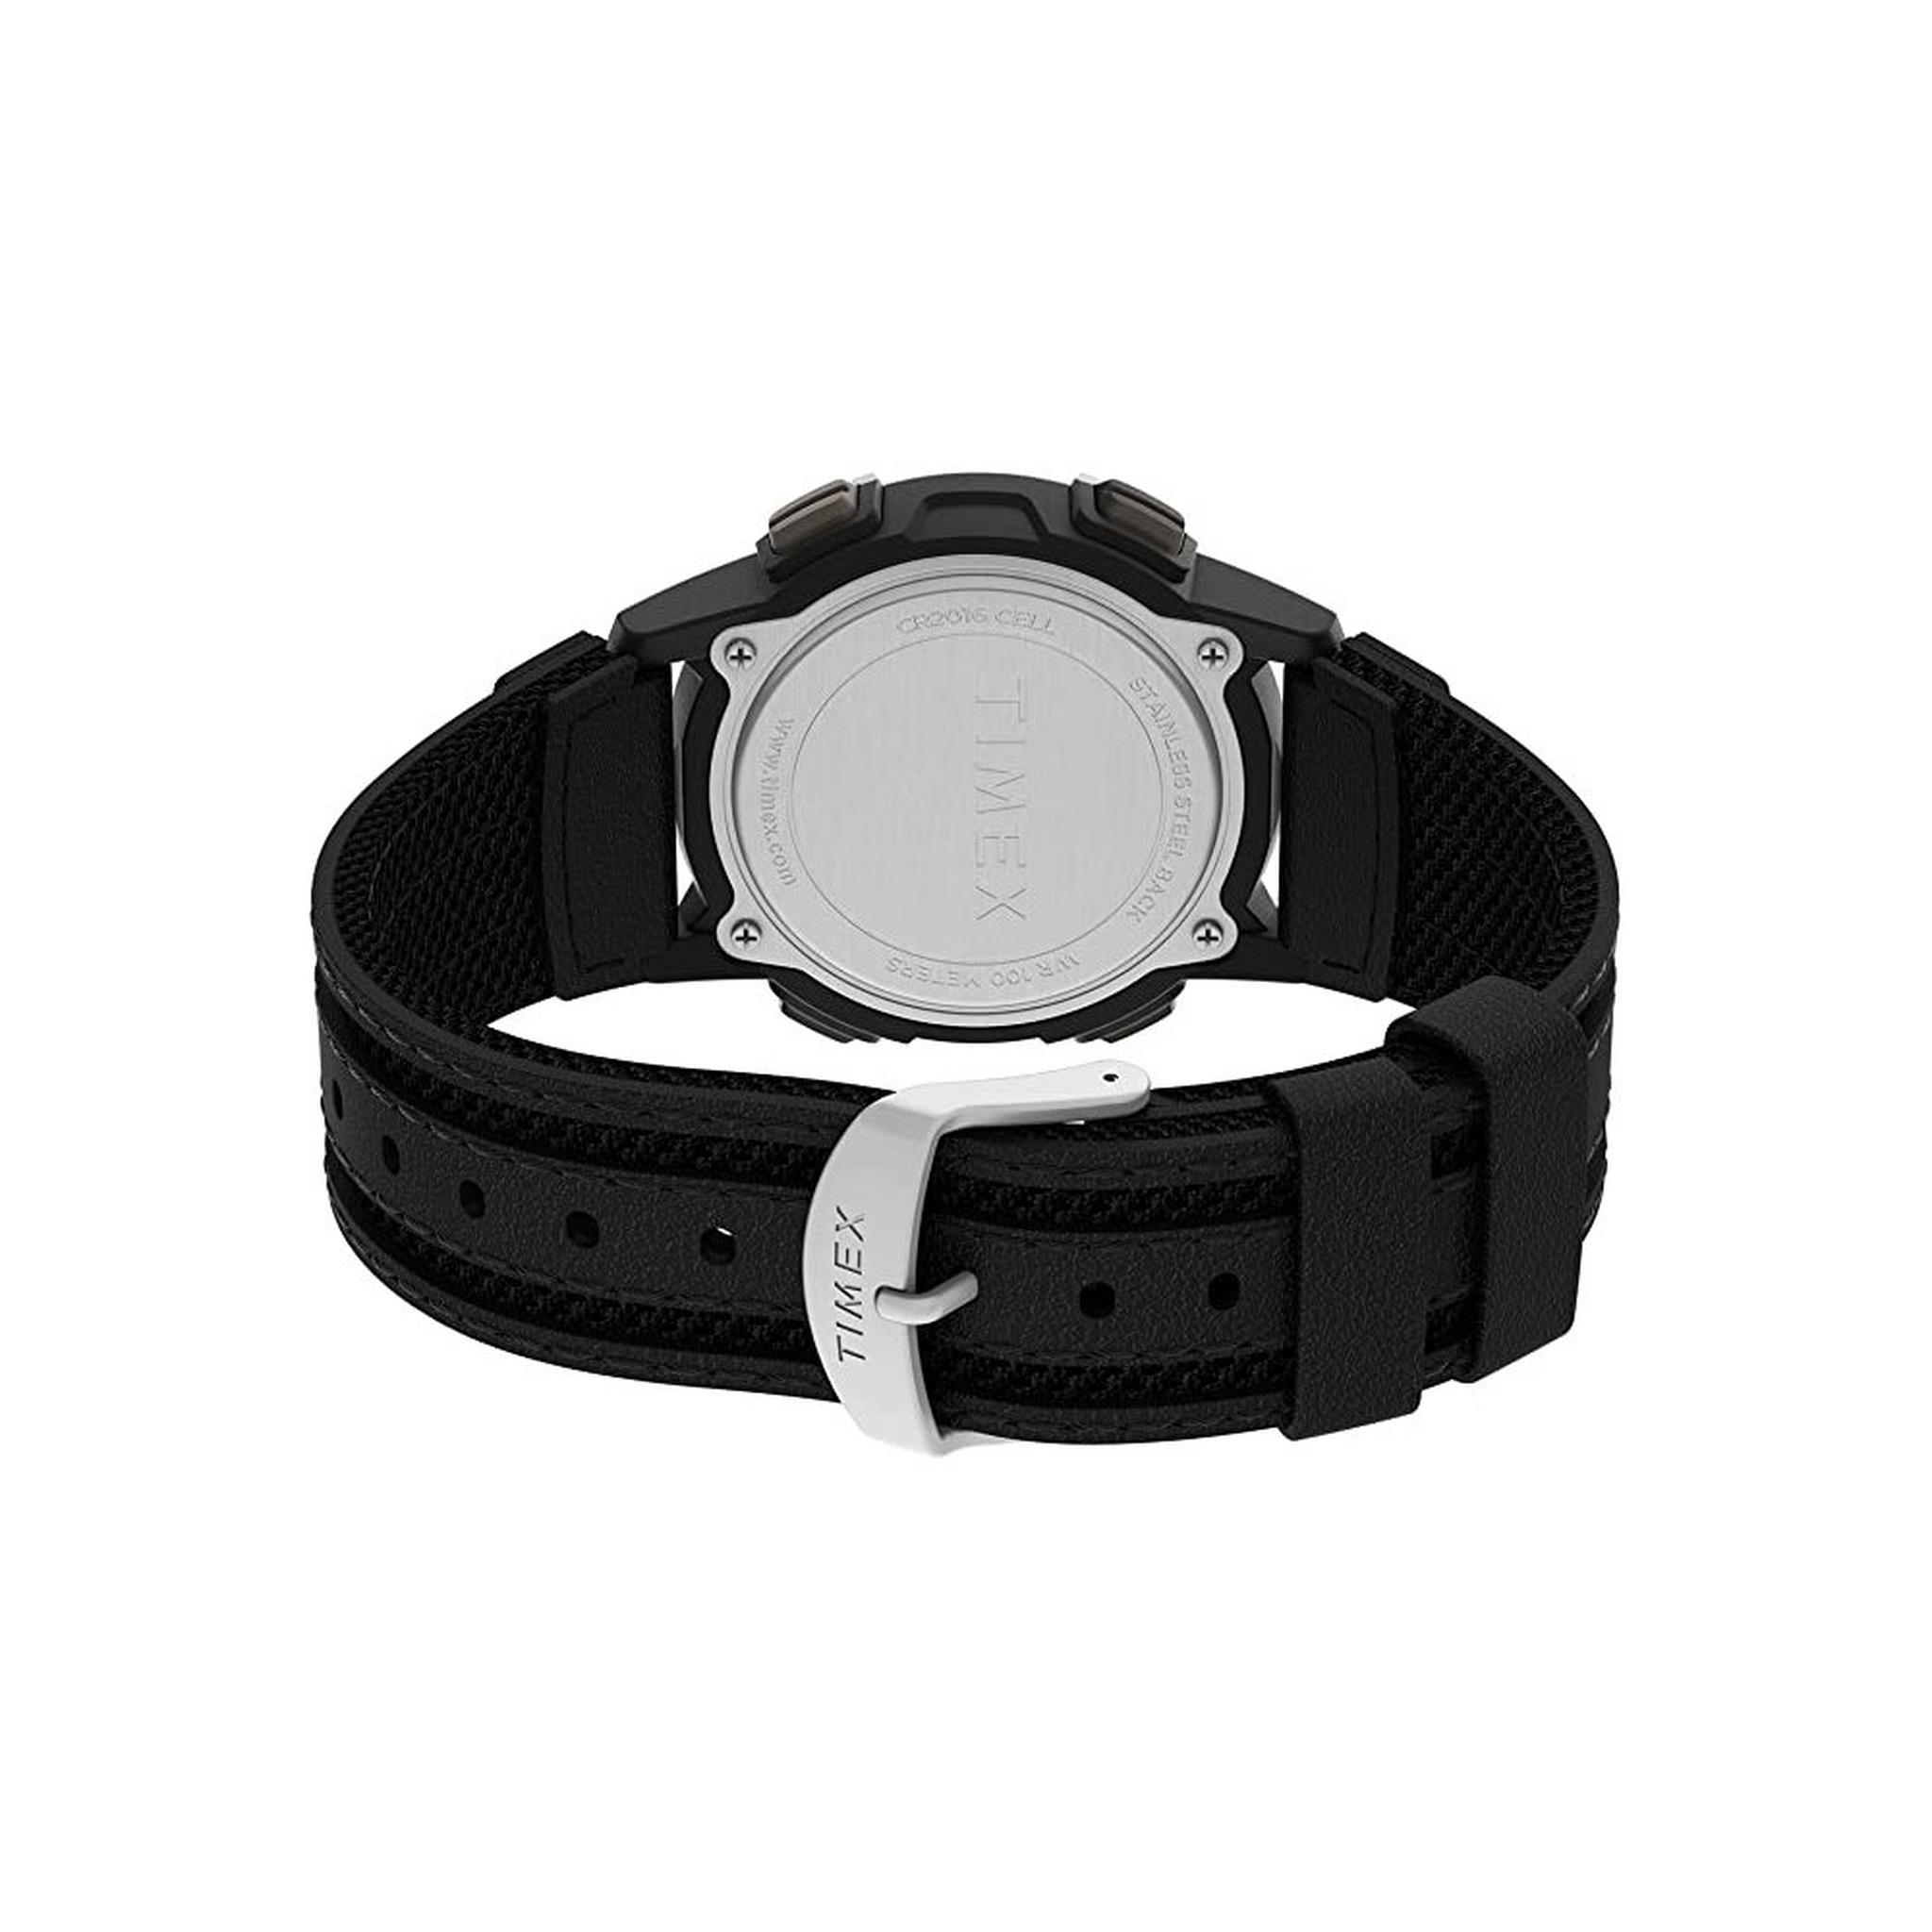 ساعة اكسبديشن للرجال من تايمكس، رقمية ، 41 مم ، حزام جلدي ، TW4B25200 - أسود